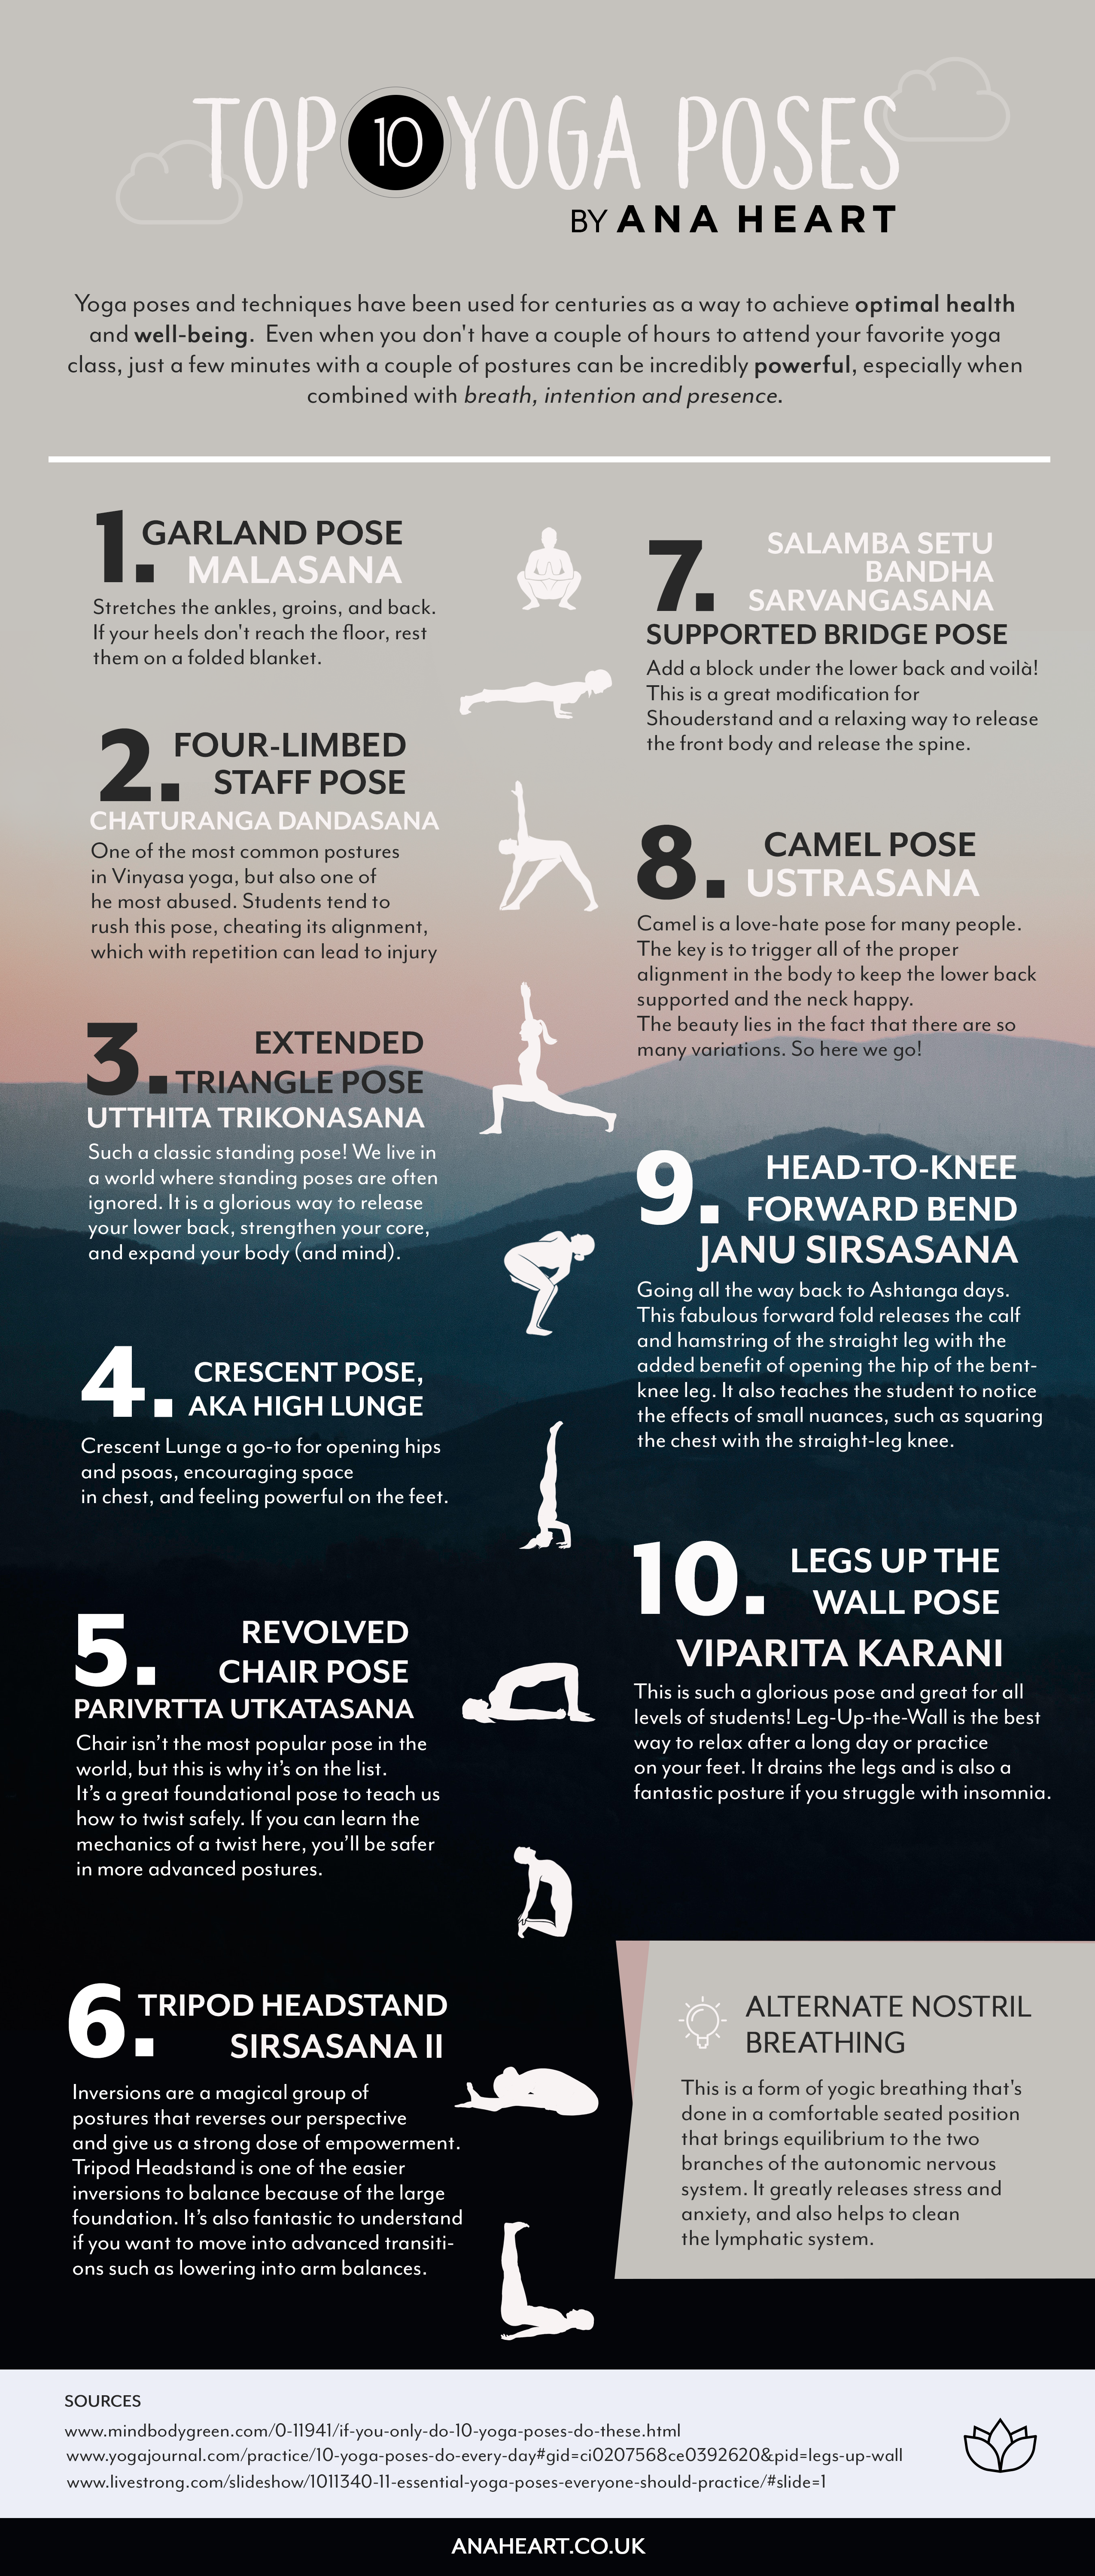 Top 10 yoga poses